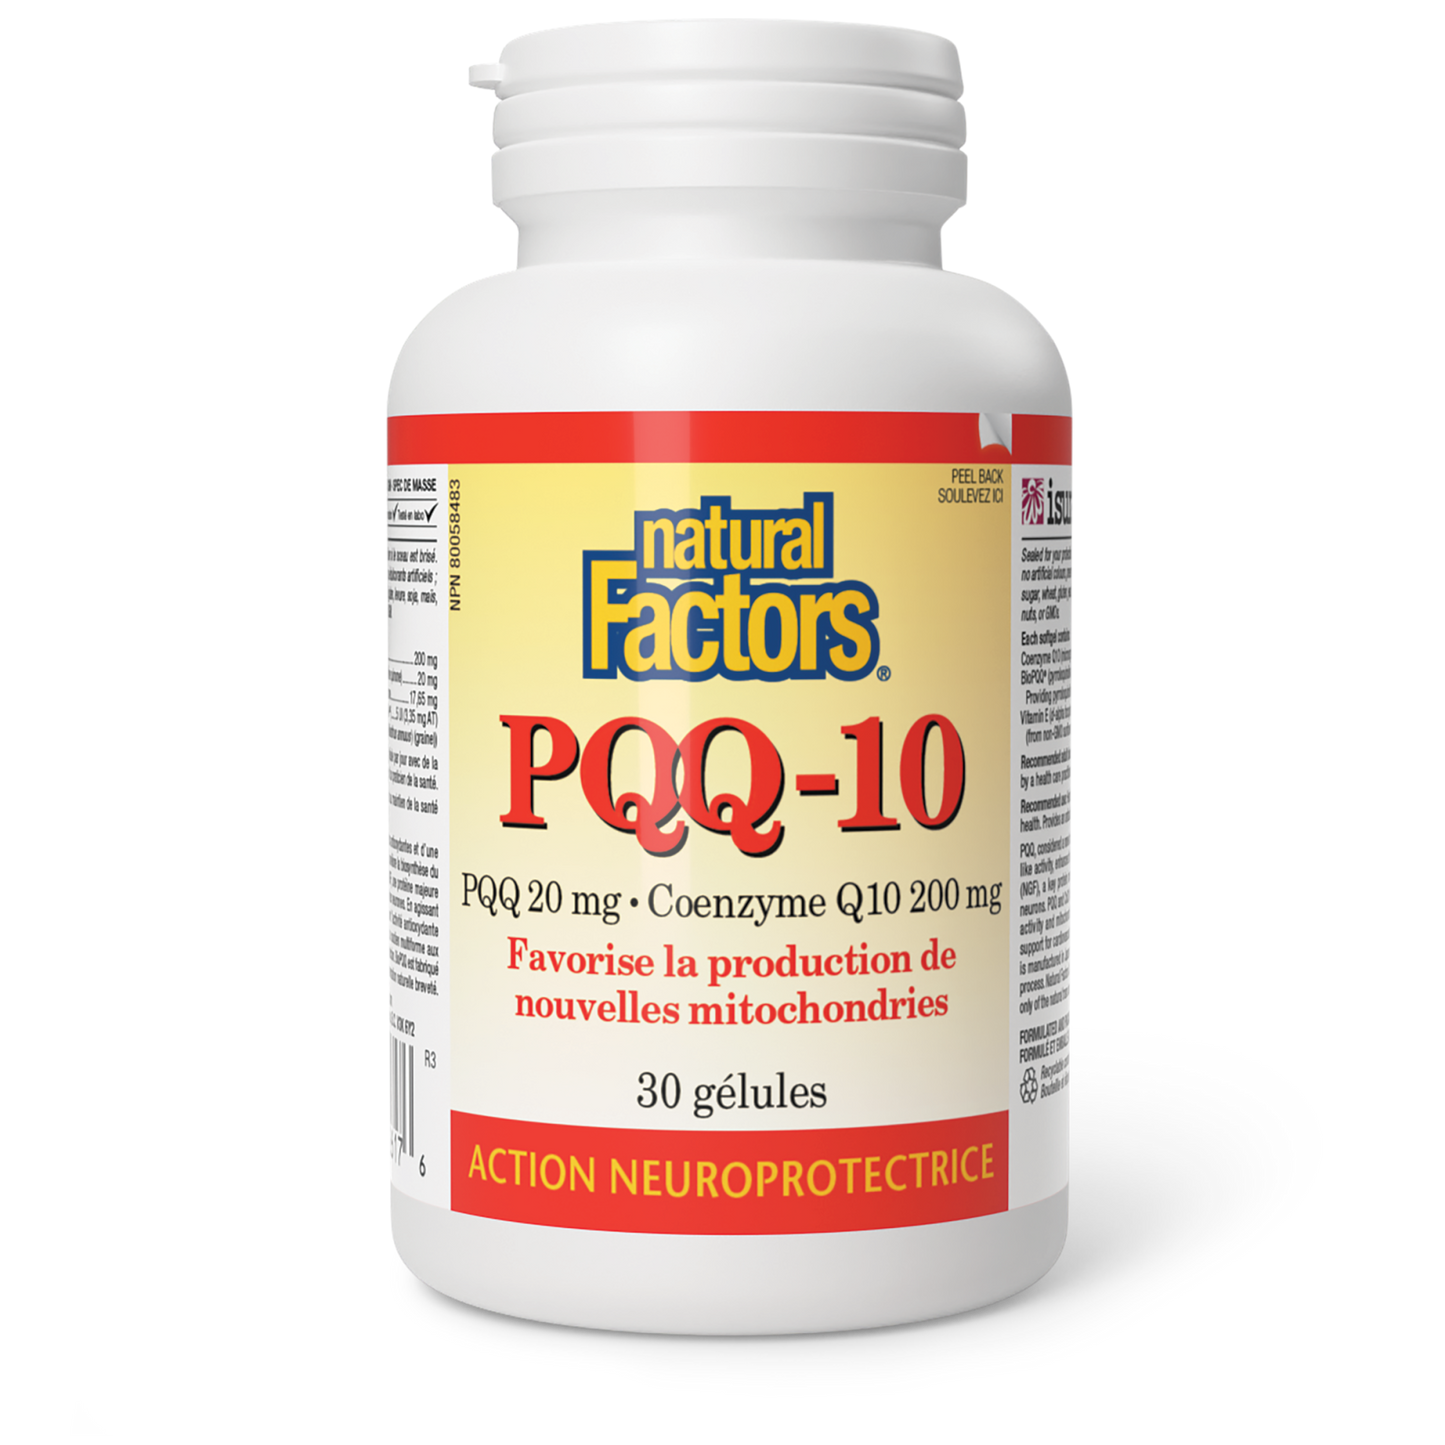 PQQ-10 20 mg · Coenzyme Q10 200 mg, Natural Factors|v|image|2617